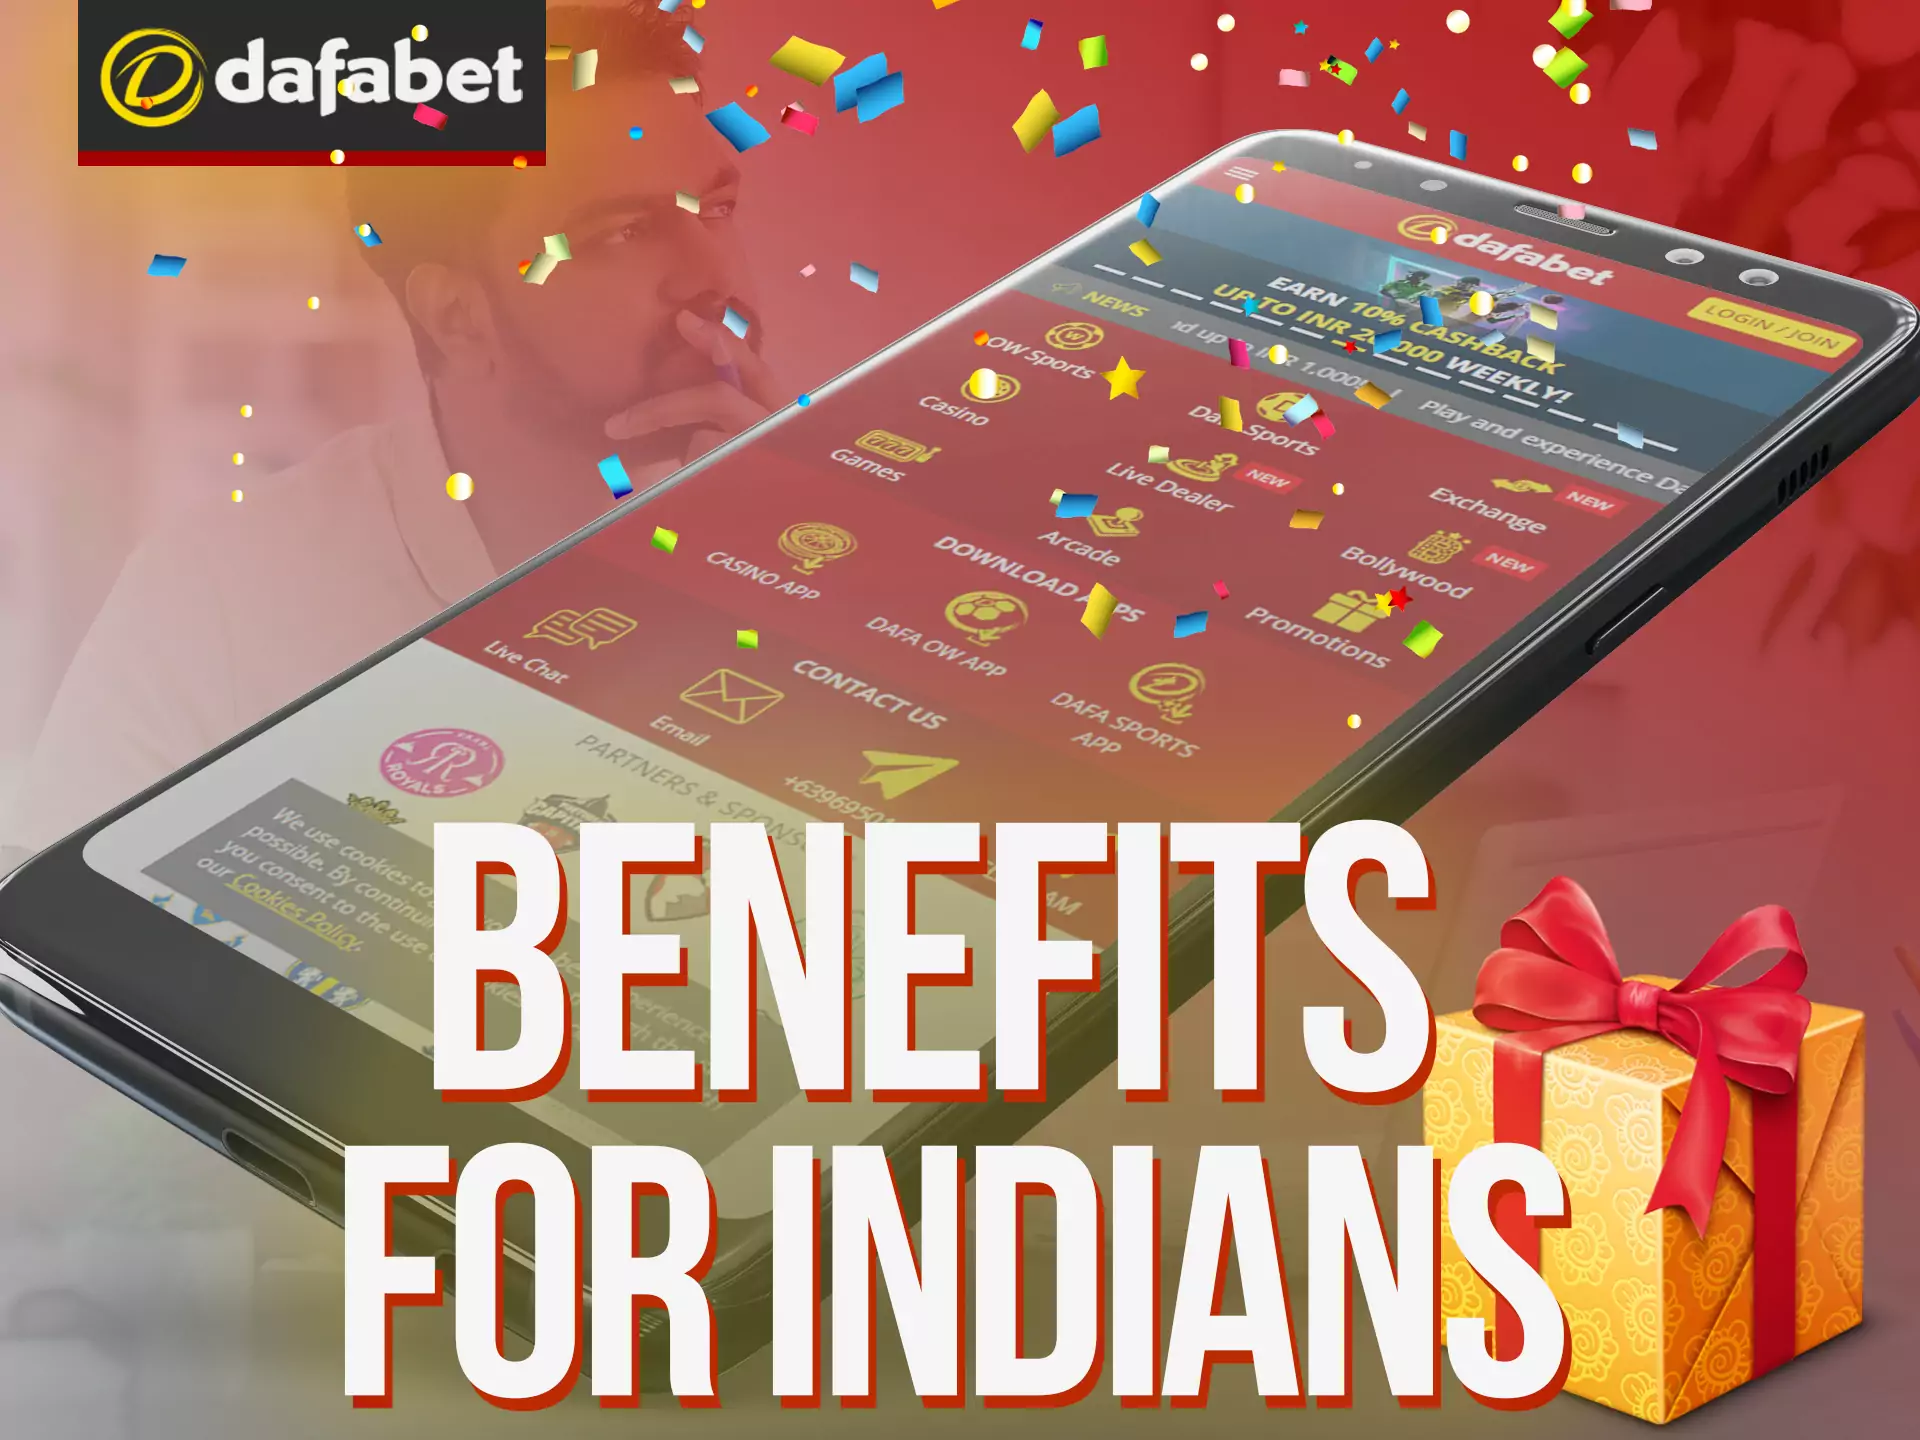 Get more bonuses by using Dafabet app.